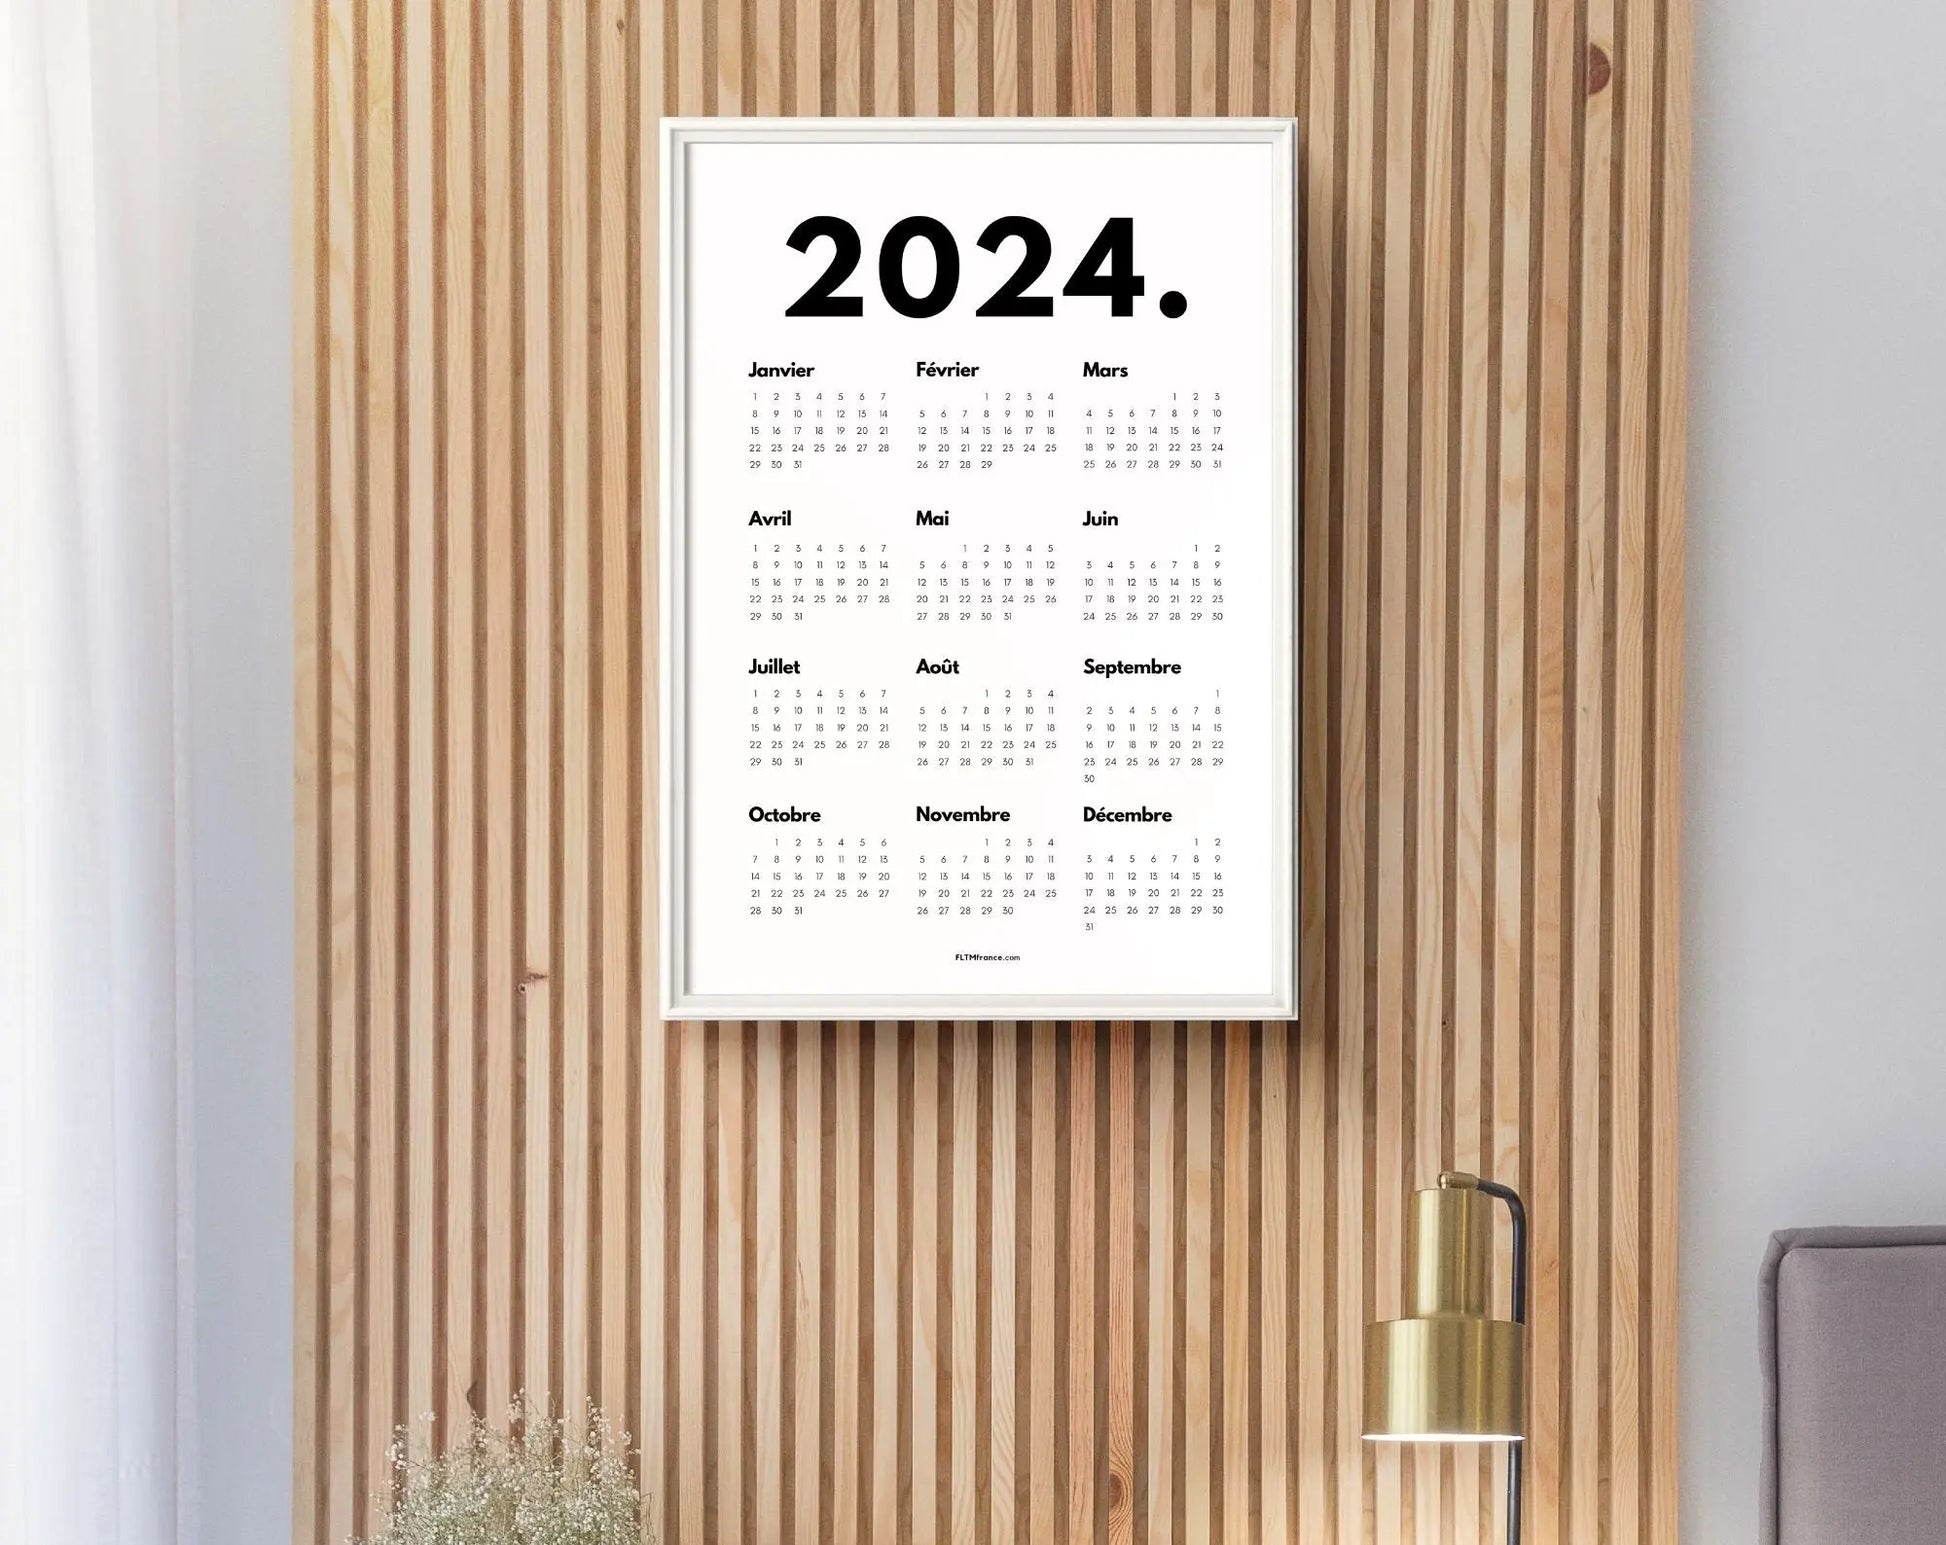 Calendrier 2024 - Calendrier 2024 à imprimer FLTMfrance